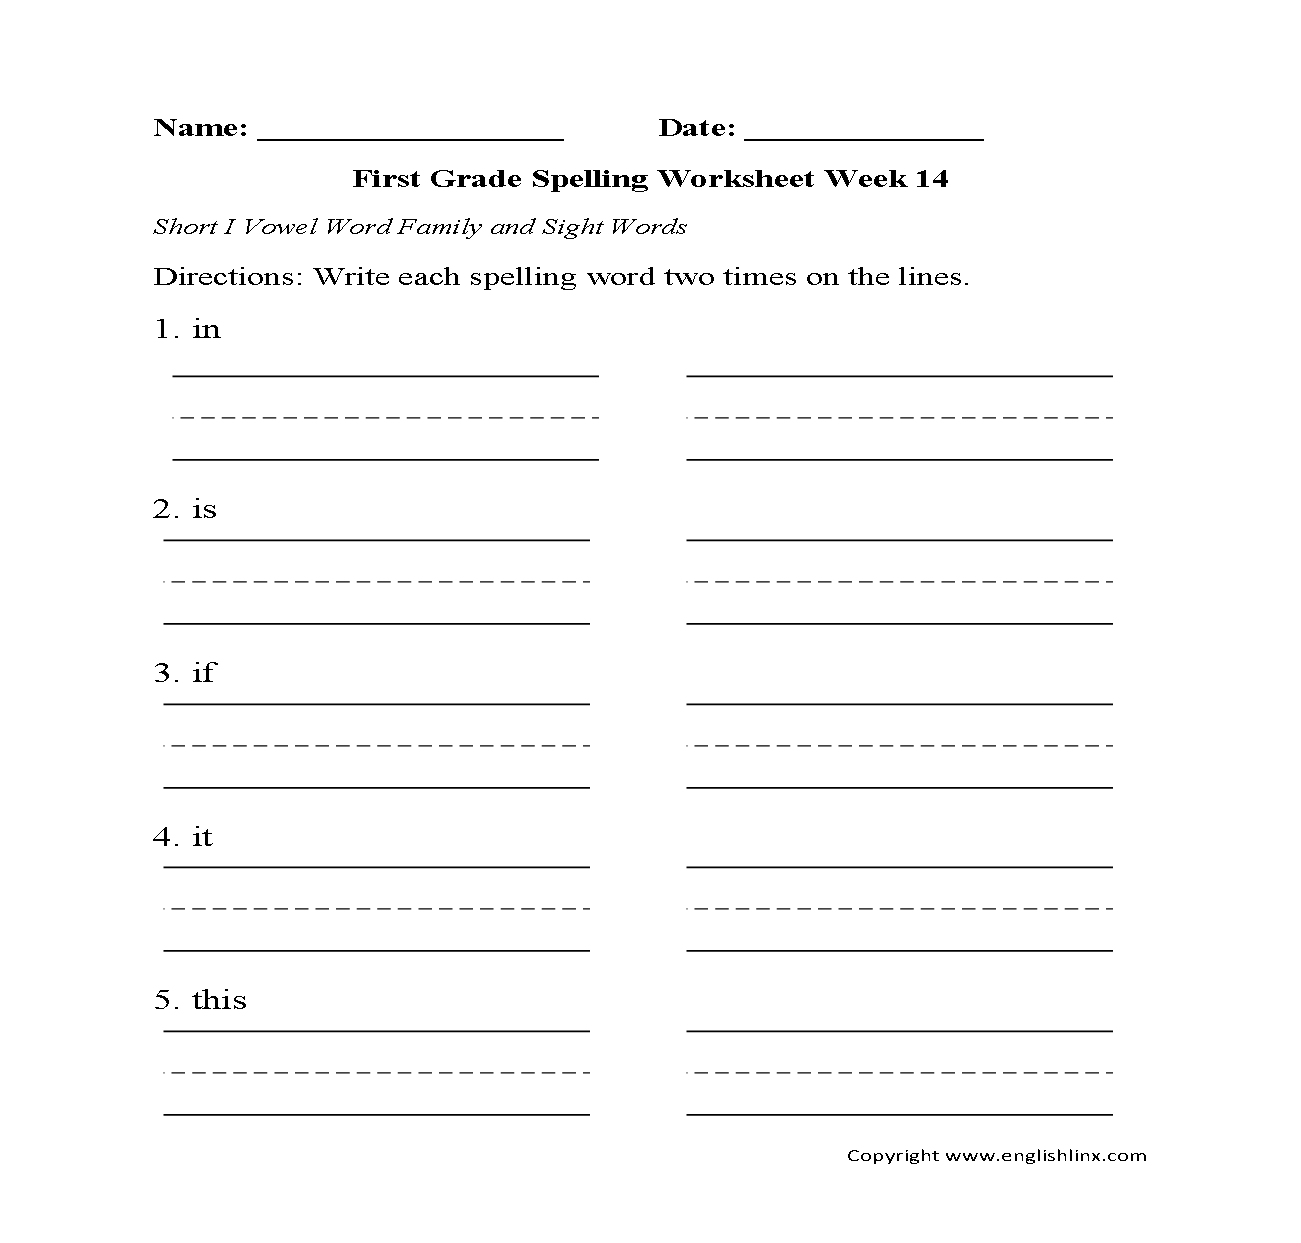 Spelling Worksheets | First Grade Spelling Worksheets